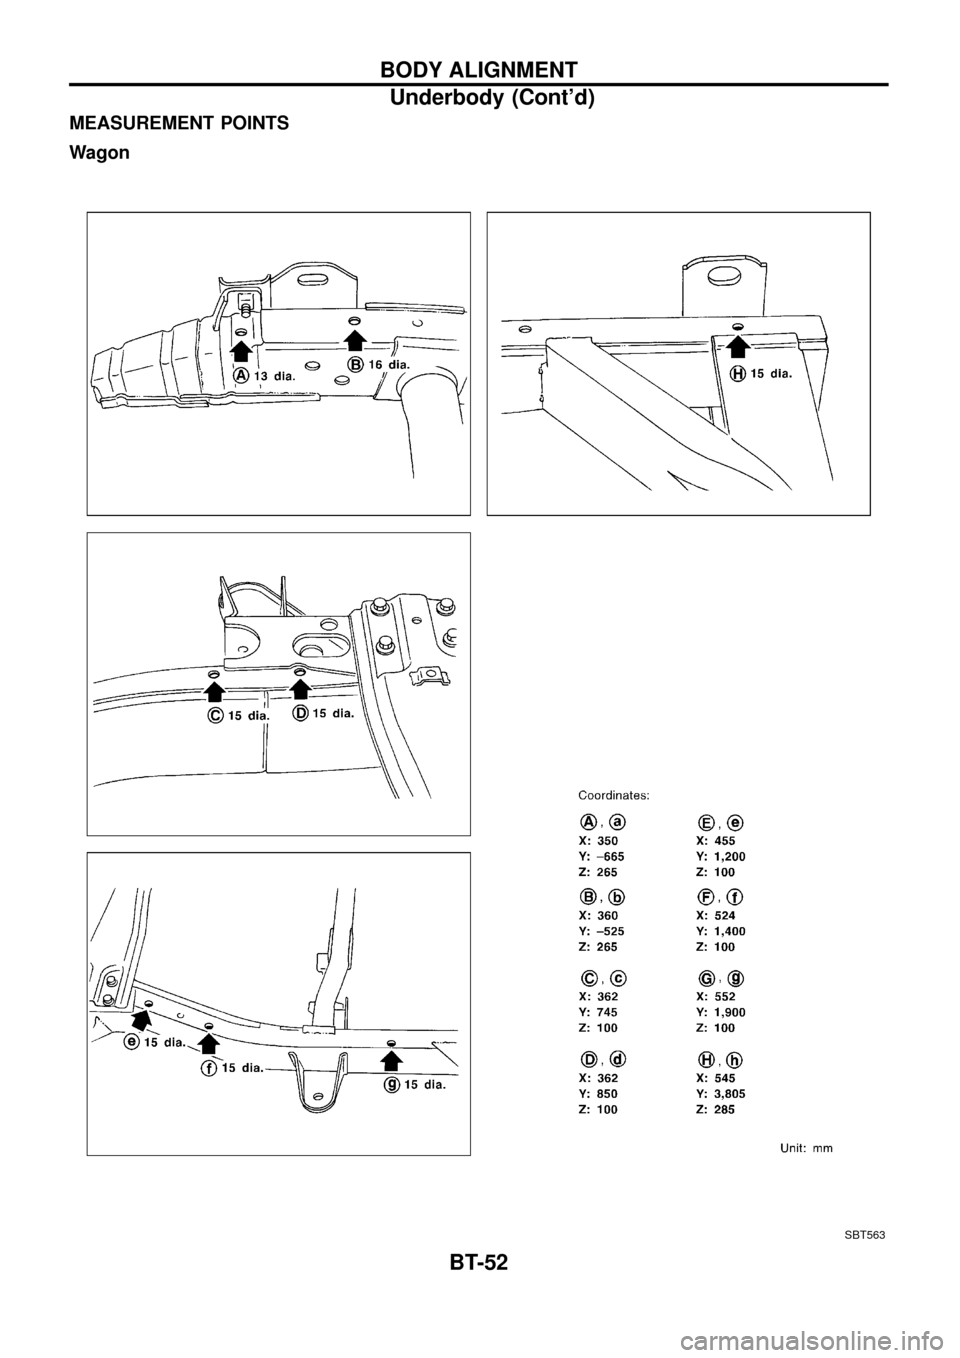 NISSAN PATROL 1998 Y61 / 5.G Body Repair Manual MEASUREMENT POINTS
Wagon
SBT563
BODY ALIGNMENT
Underbody (Contd)
BT-52 